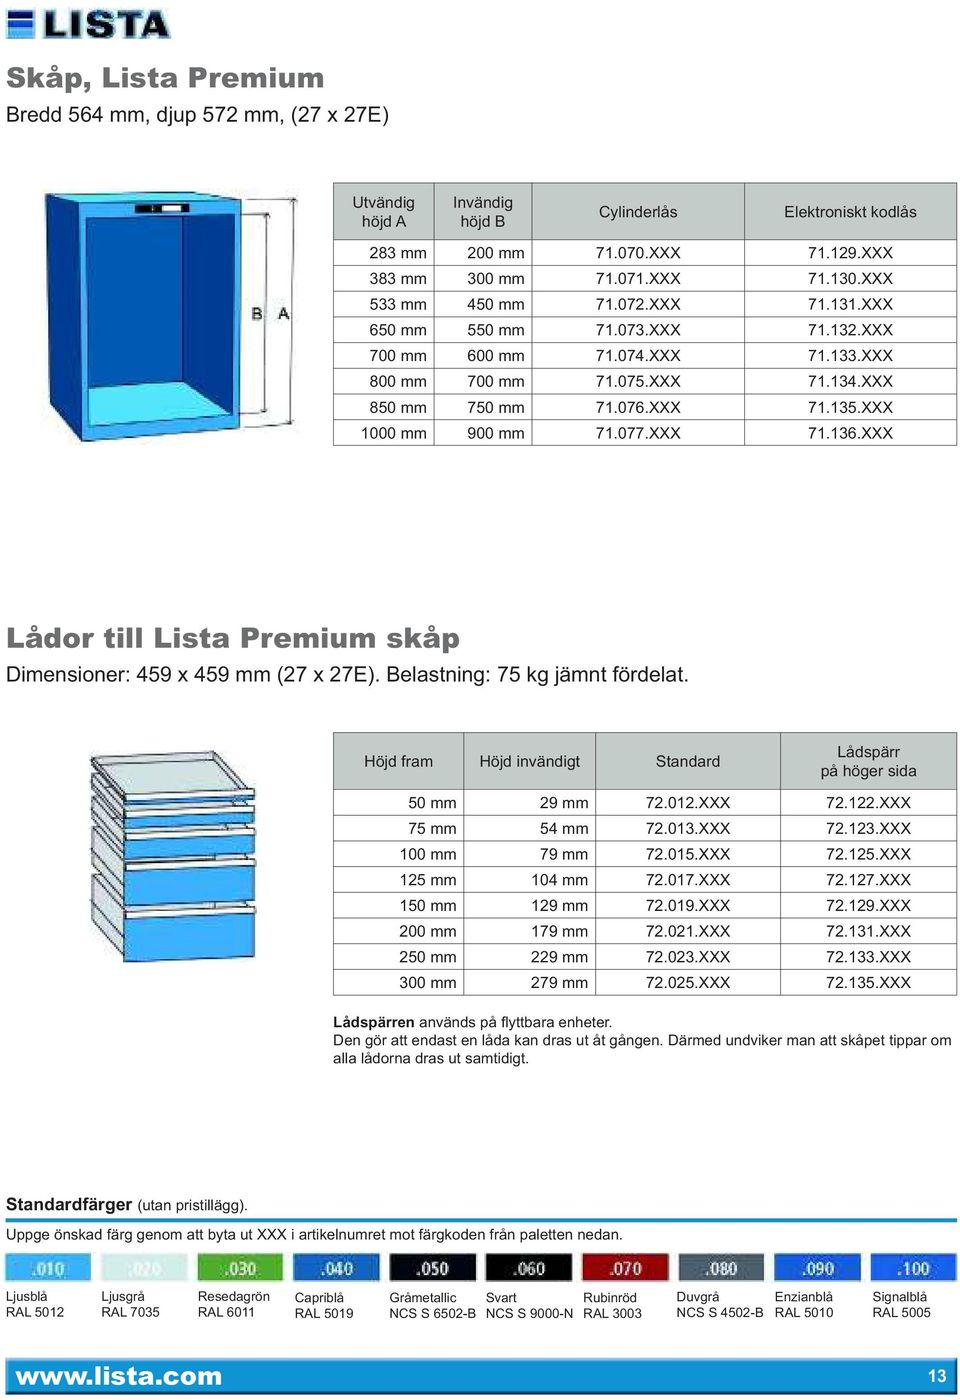 XXX 1000 mm 900 mm 71.077.XXX 71.136.XXX Lådor till Lista Premium skåp Dimensioner: 459 x 459 mm (27 x 27E). Belastning: 75 kg jämnt fördelat.